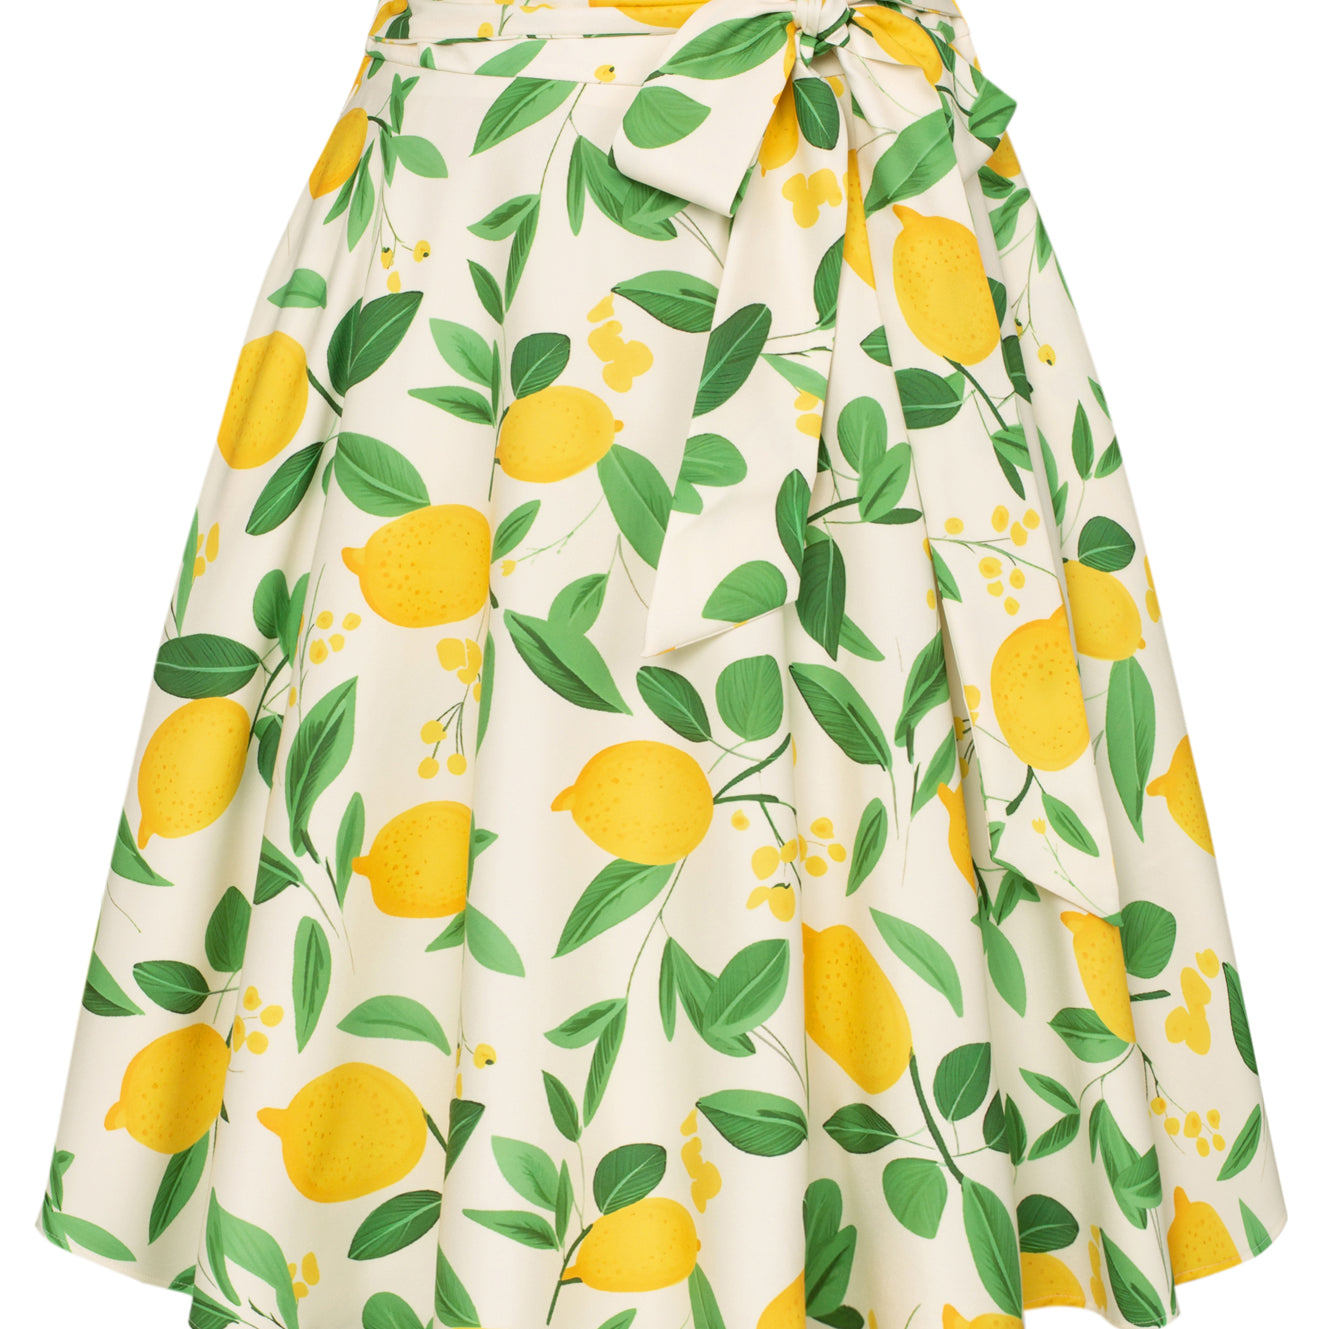 Floral Patterns Women's High Waist Bow Decorated A-Line Pockets Skirt